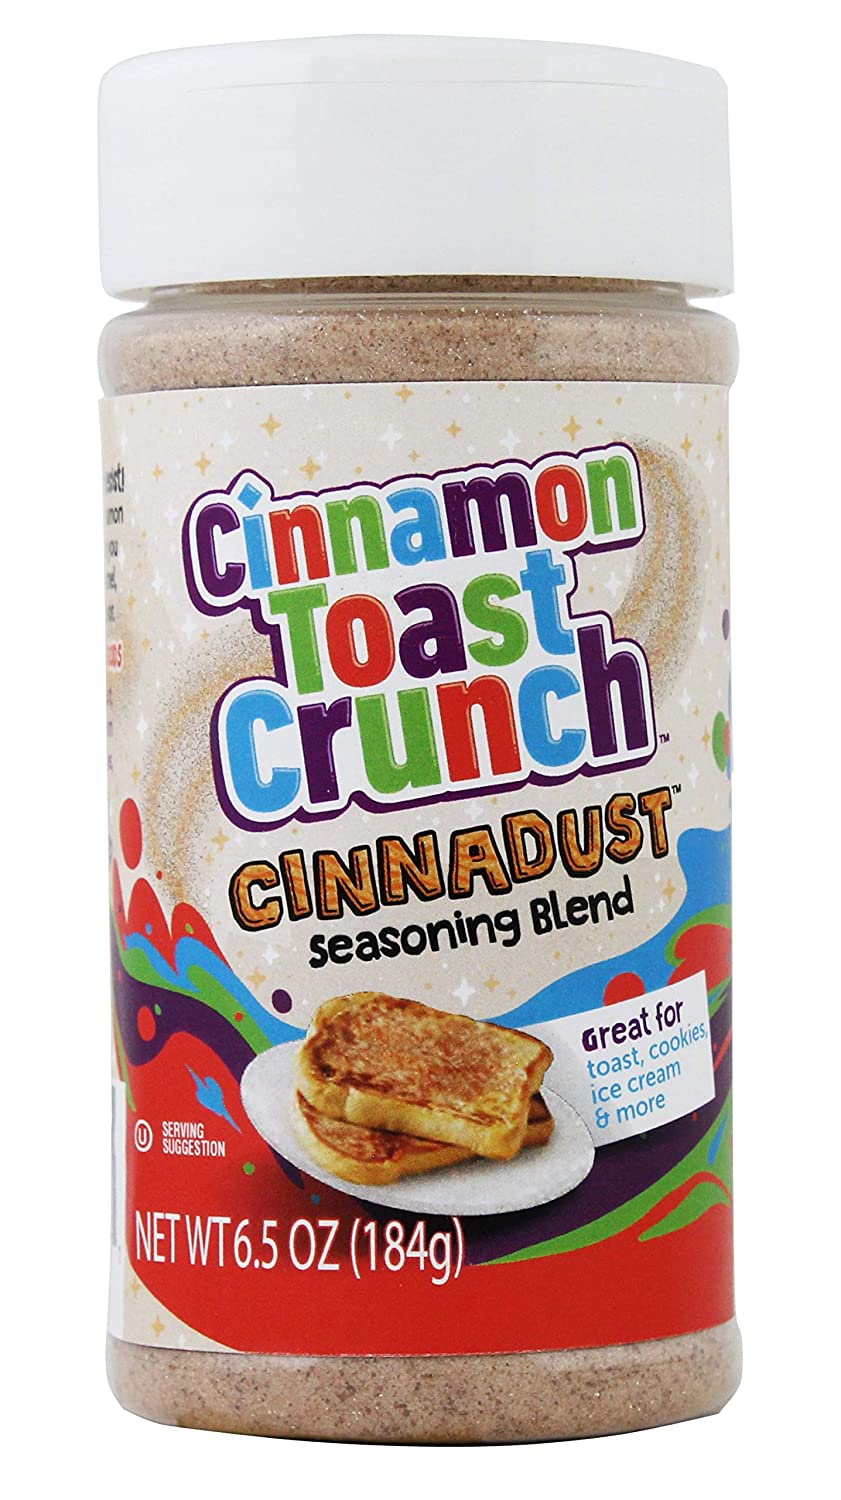 Cinnamon Toast Crunch Cinnadust Seasoning Blend - 6.5 oz